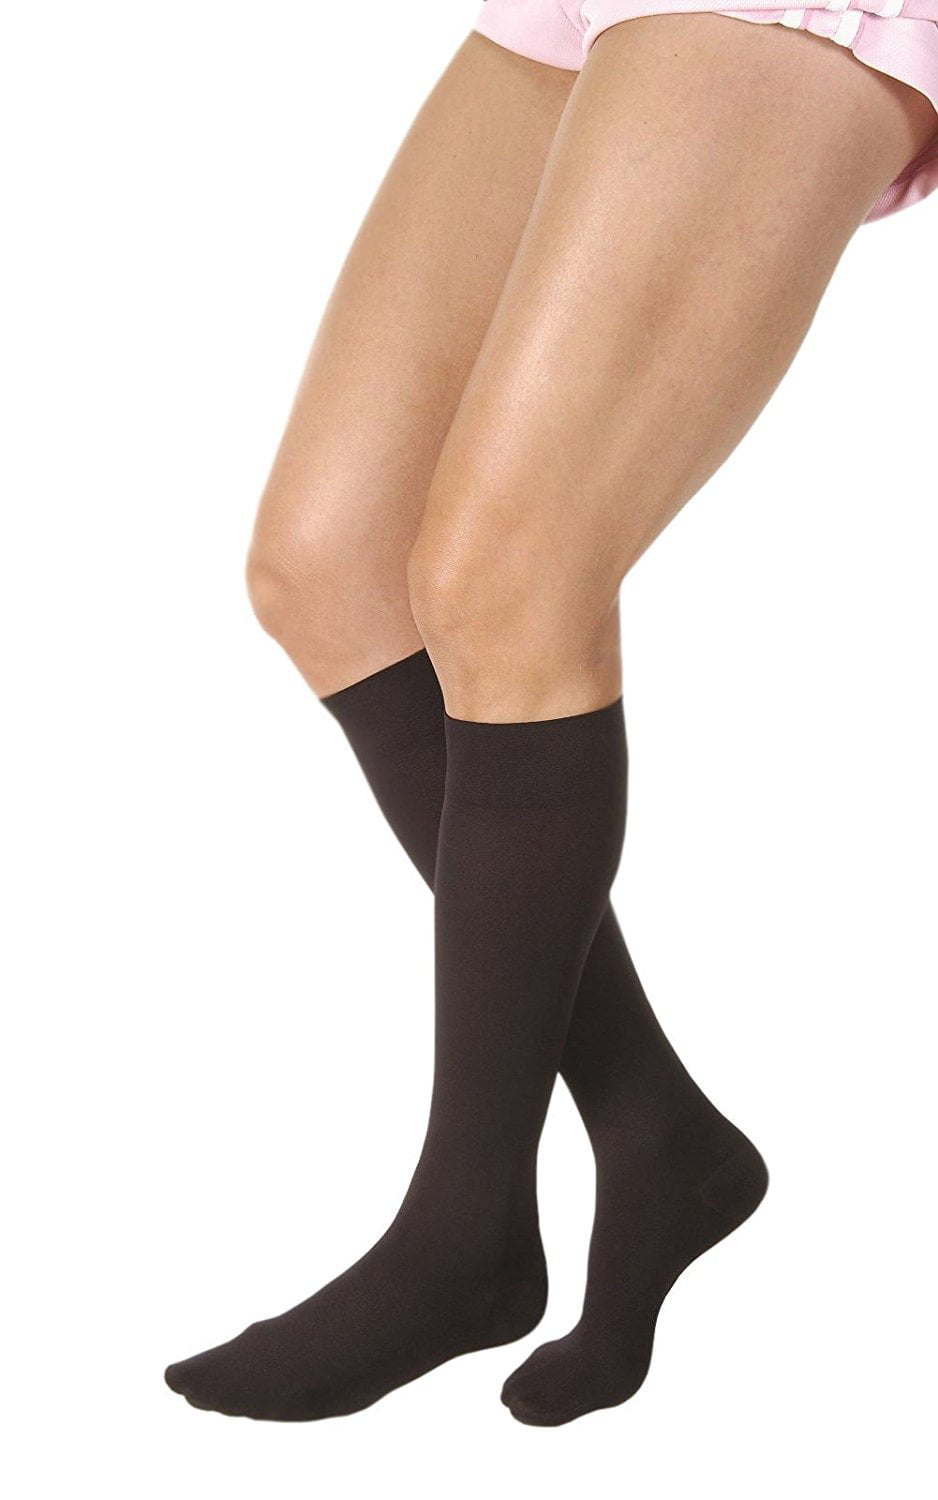 compression stockings 15 20 mmhg walmart